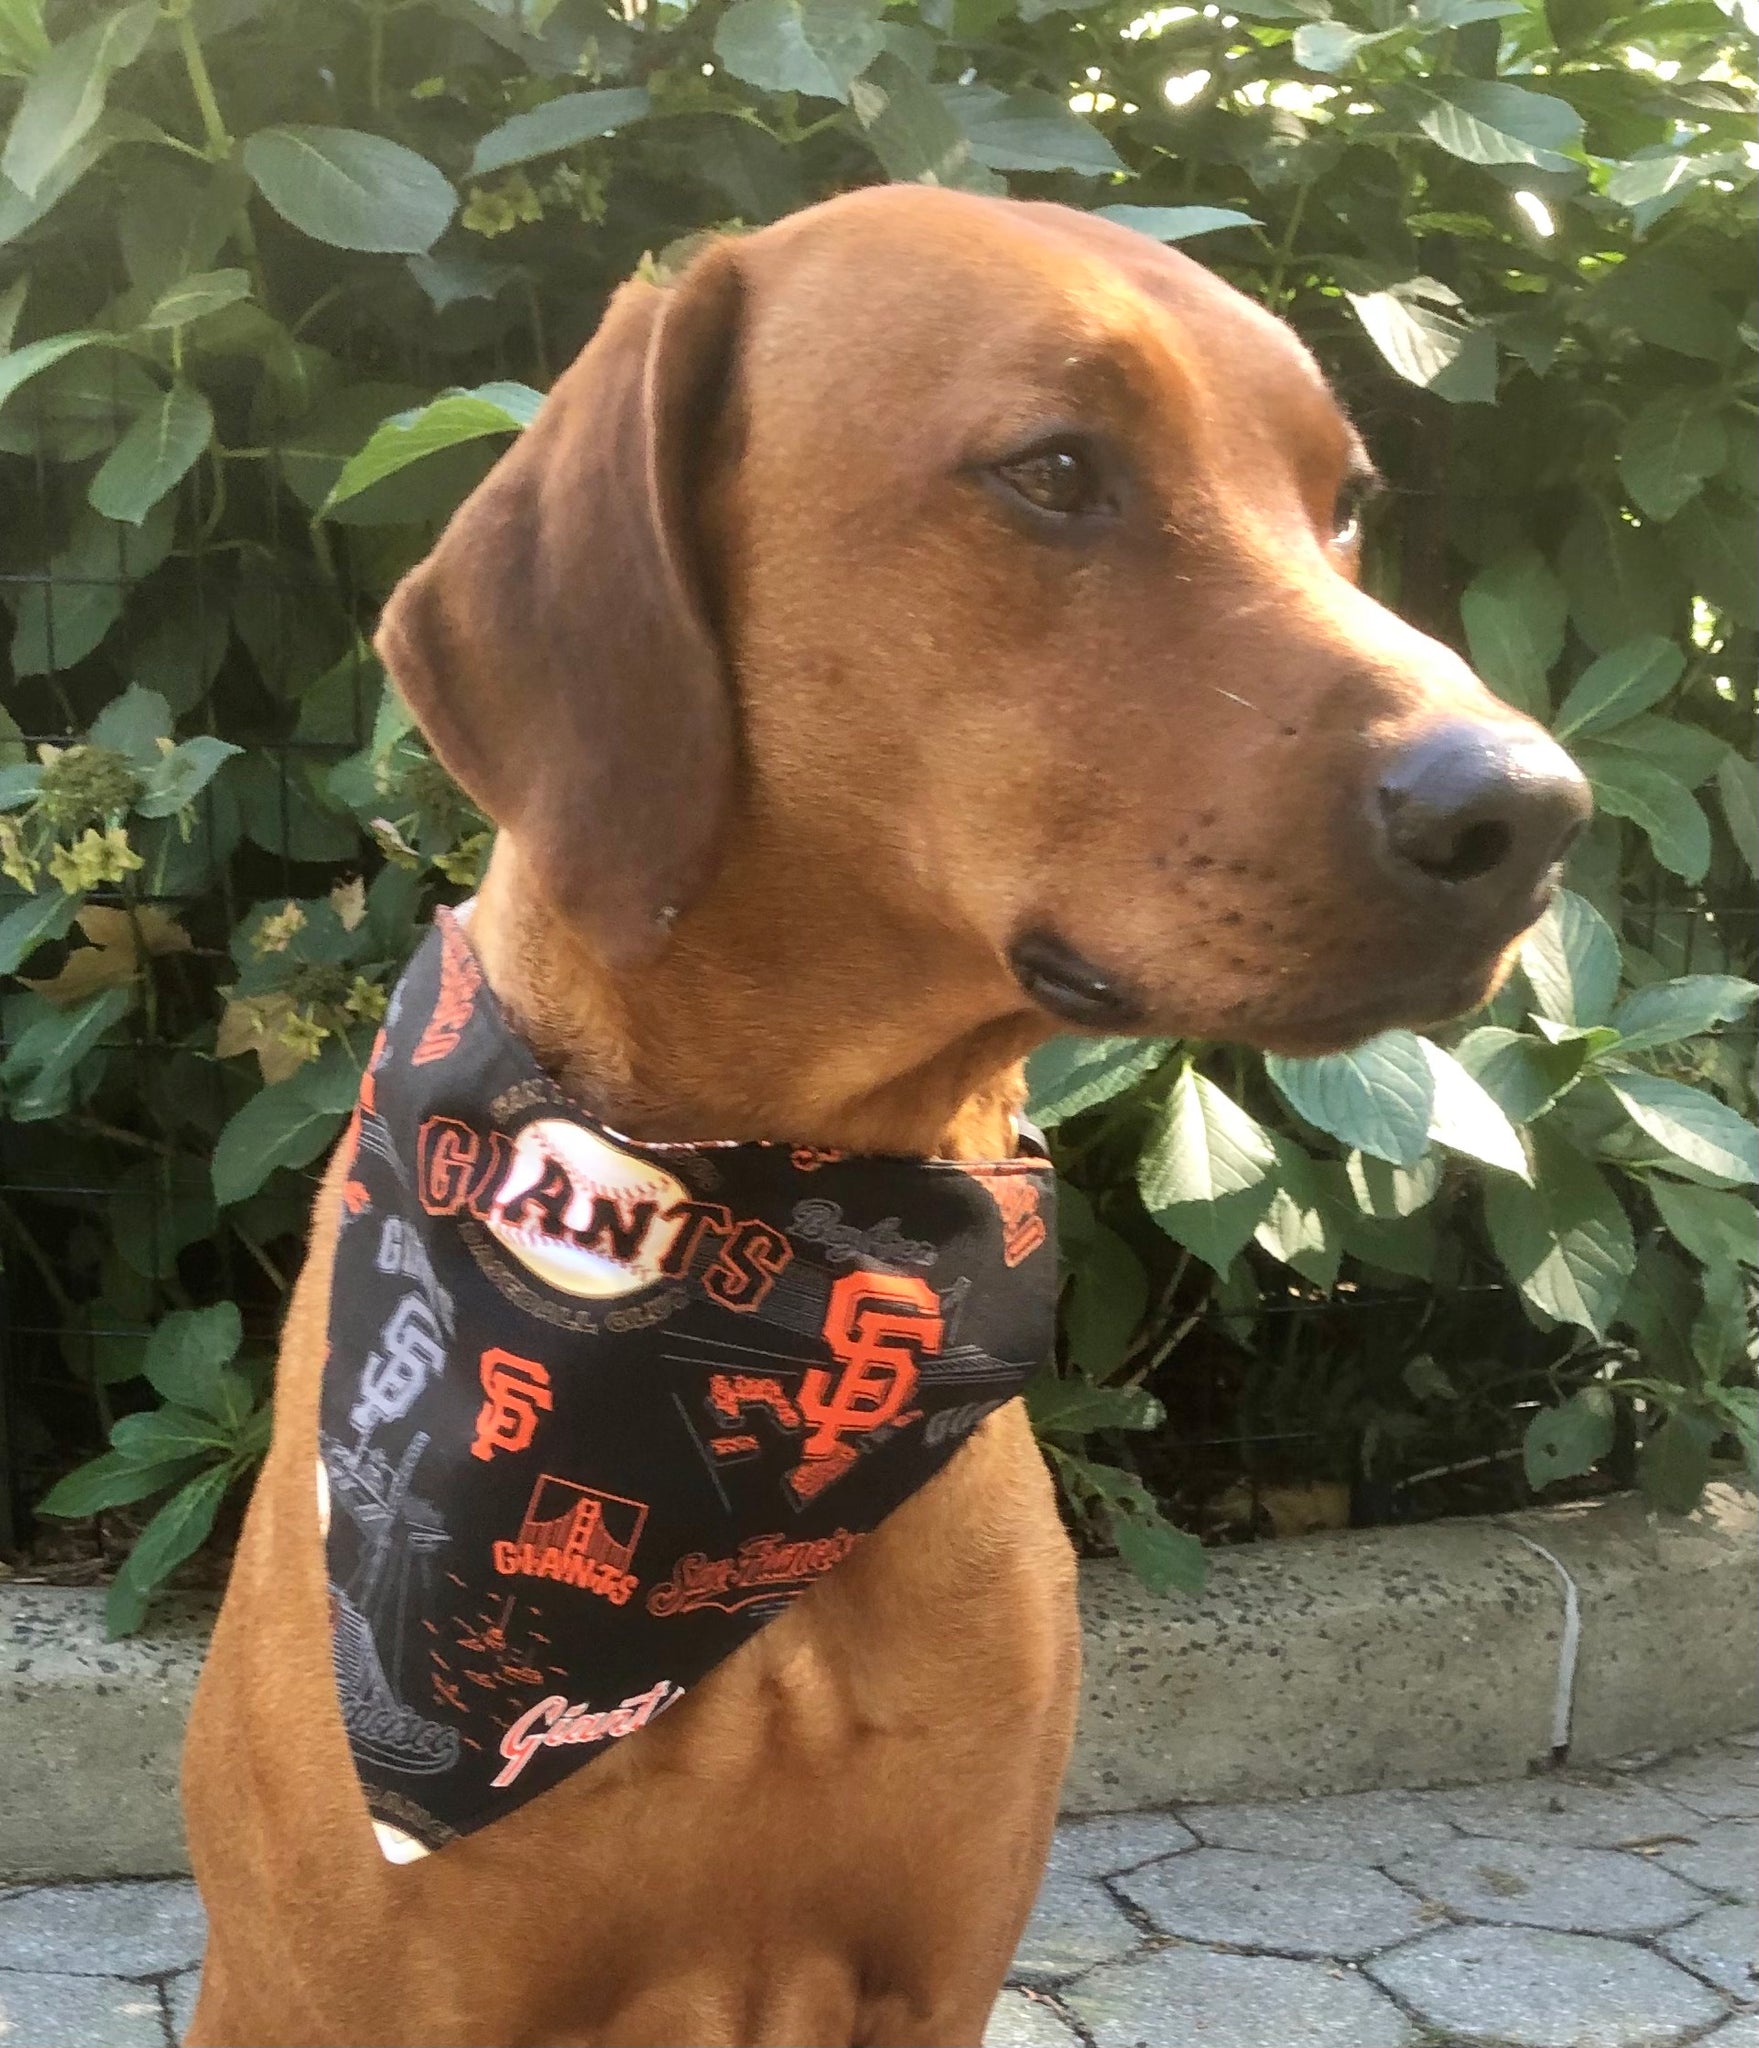 49ers custom dog jersey